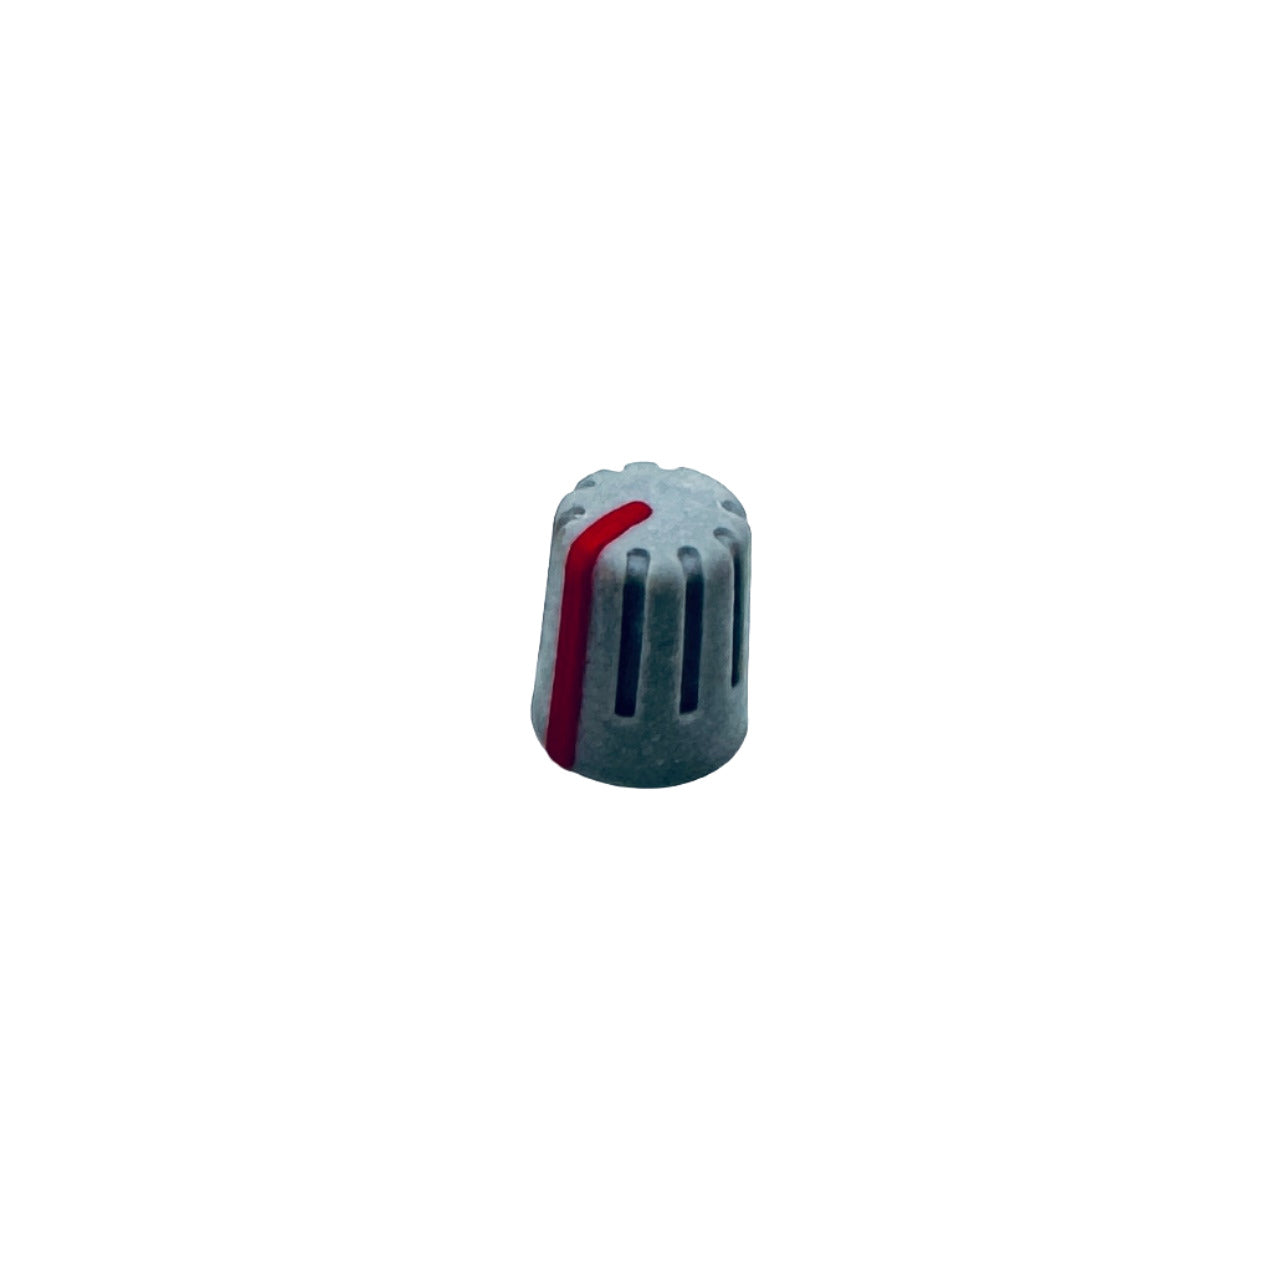 Peavey 30902120 Small Grey/ Red Knob